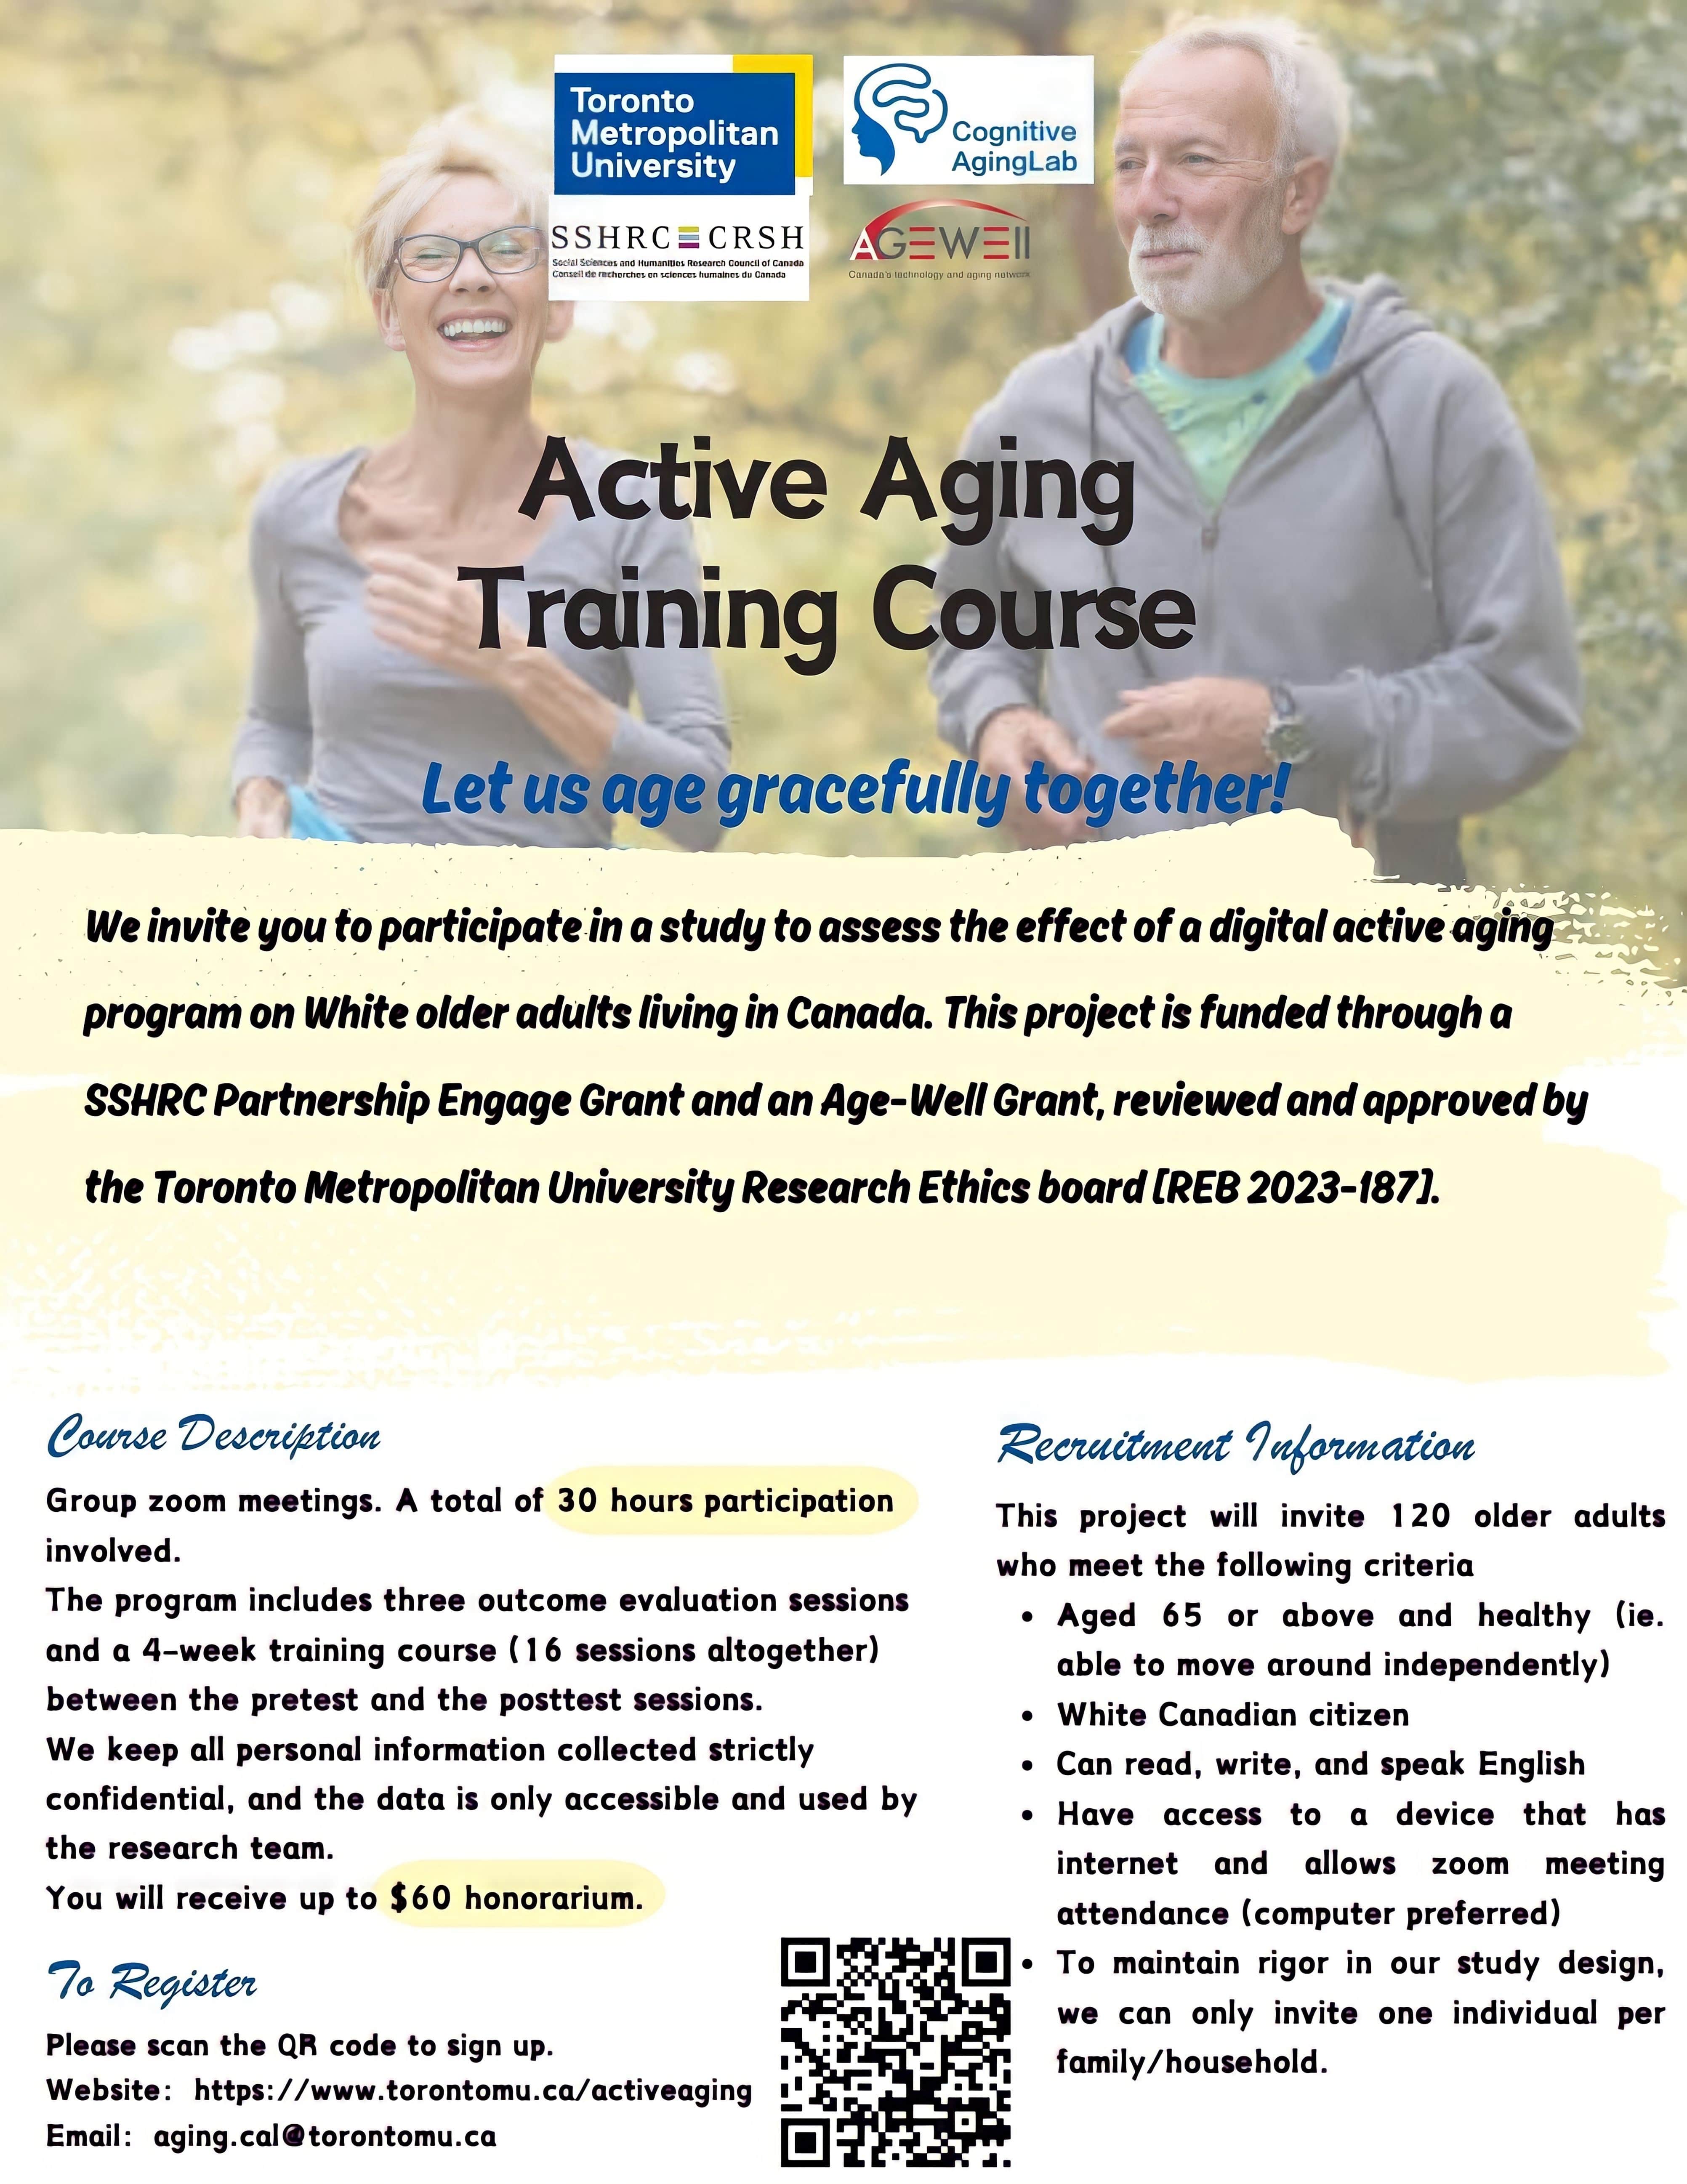 Active Aging Recruitment Flyer